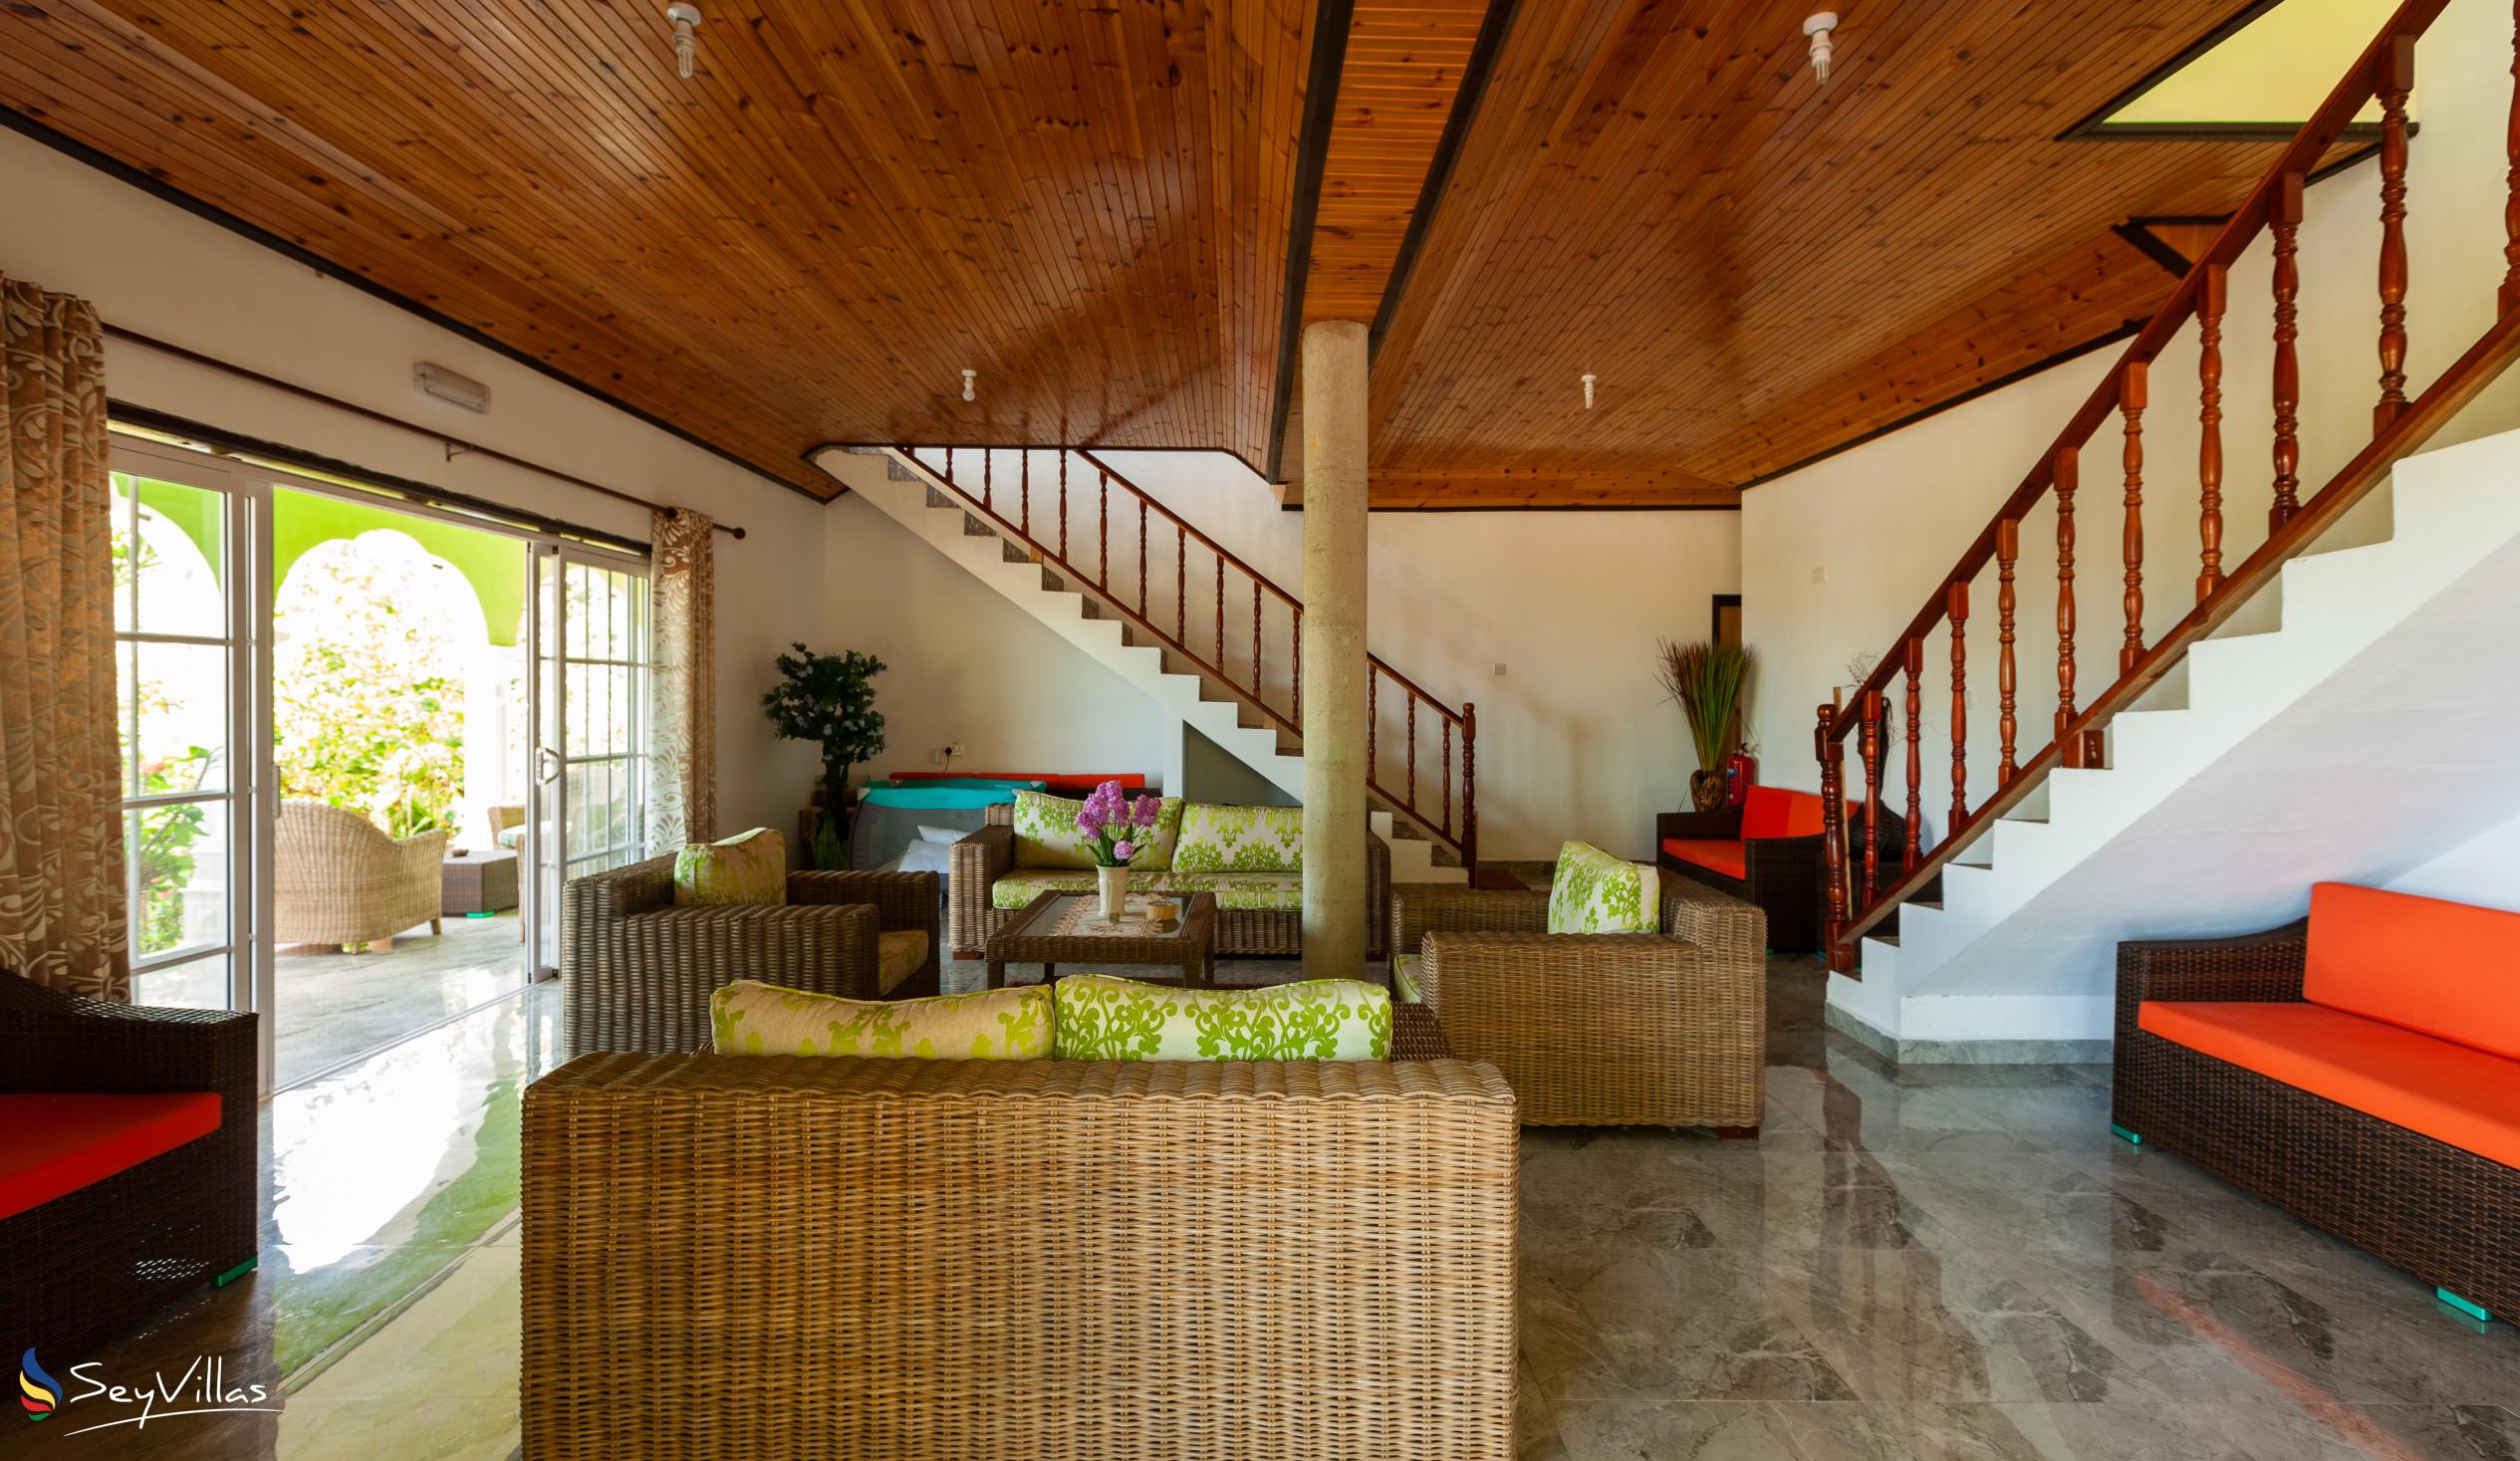 Foto 25: Villa Hortensia - Innenbereich - La Digue (Seychellen)